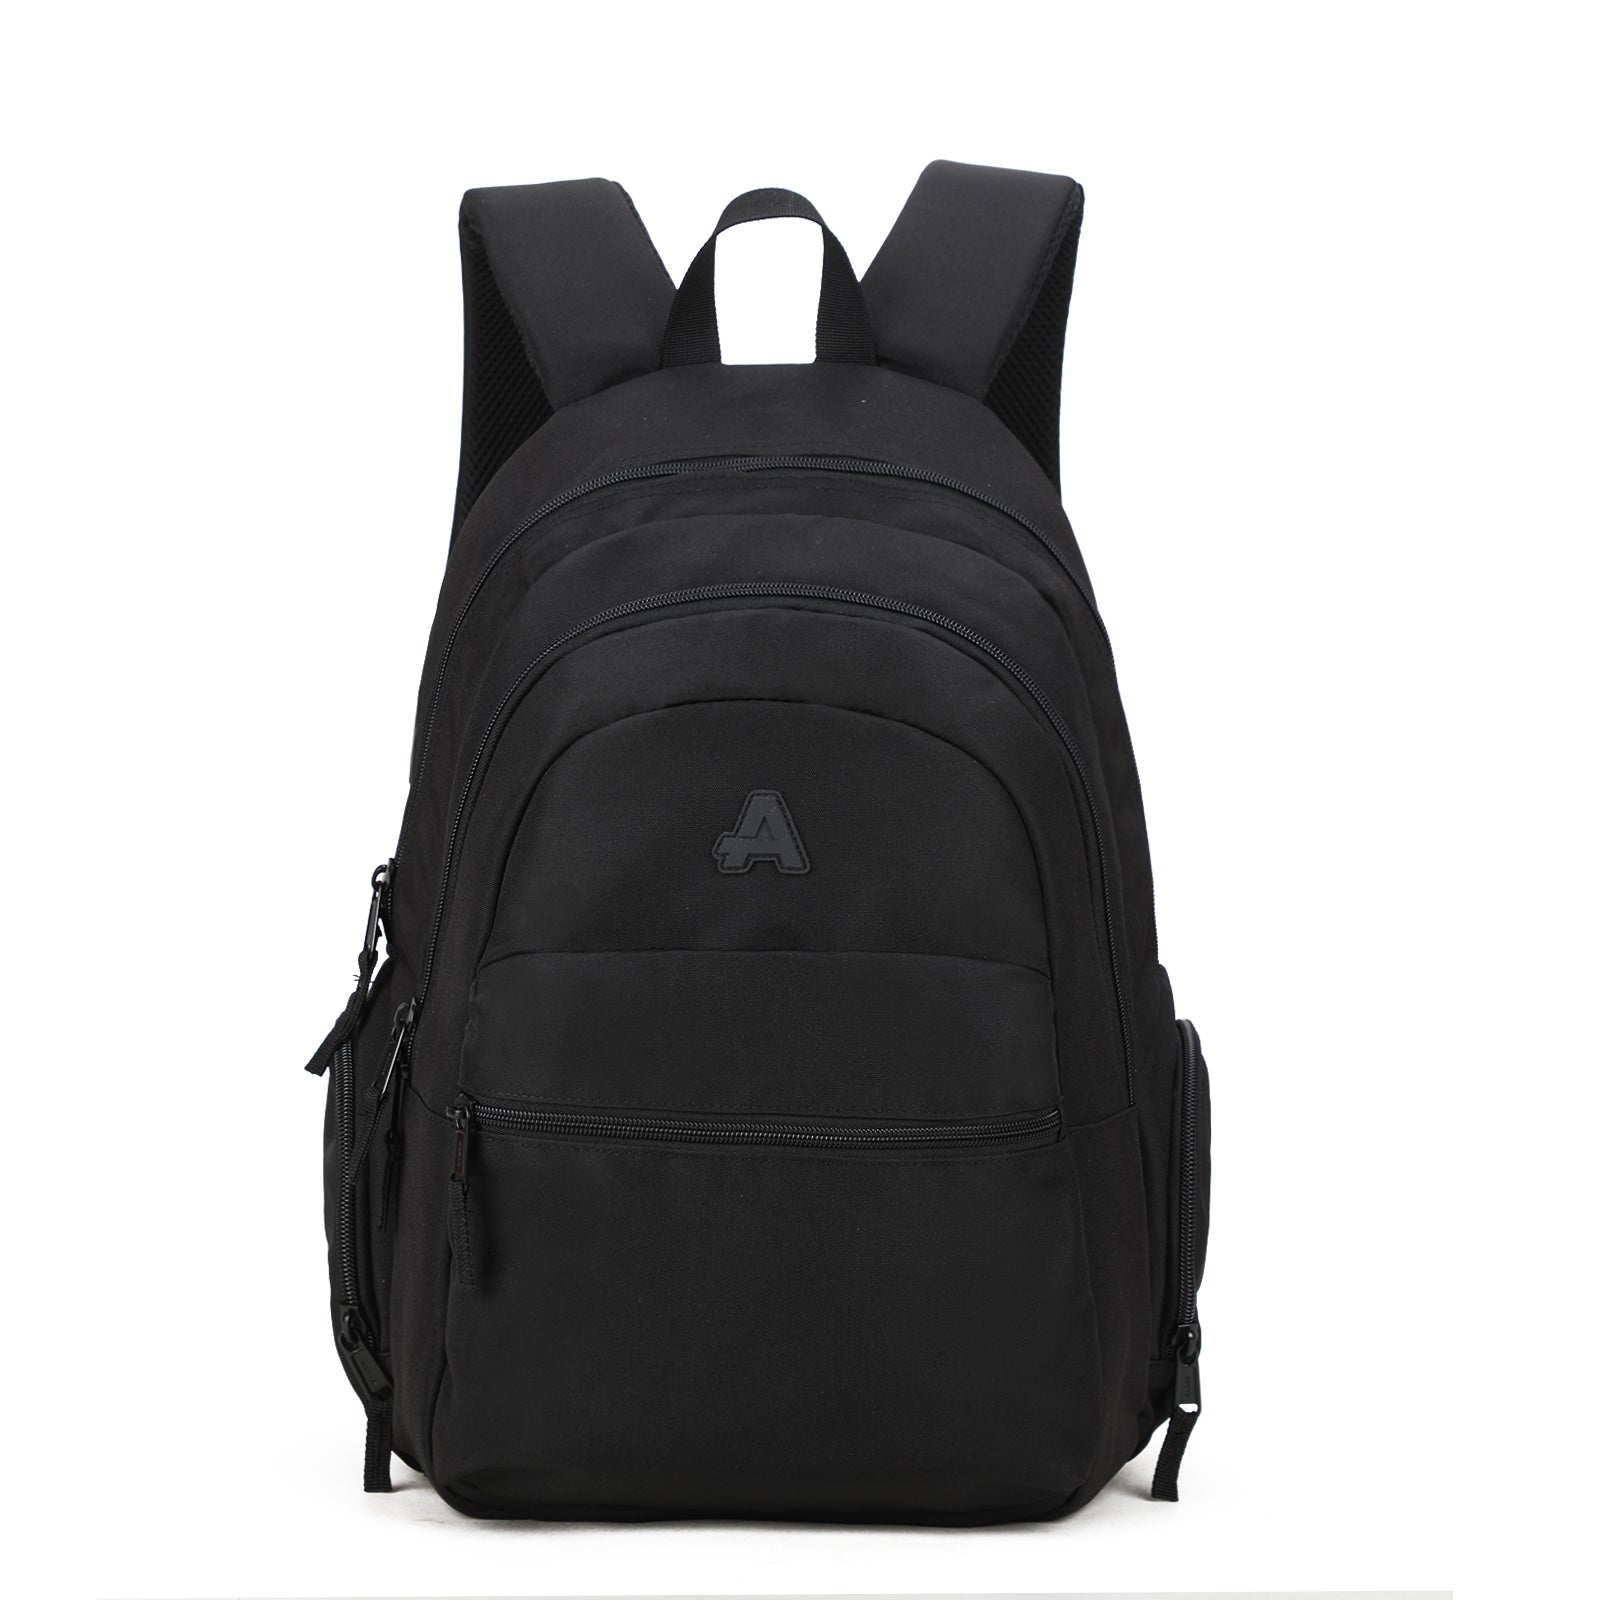 Aoking Travel Backpack XN2619 Black